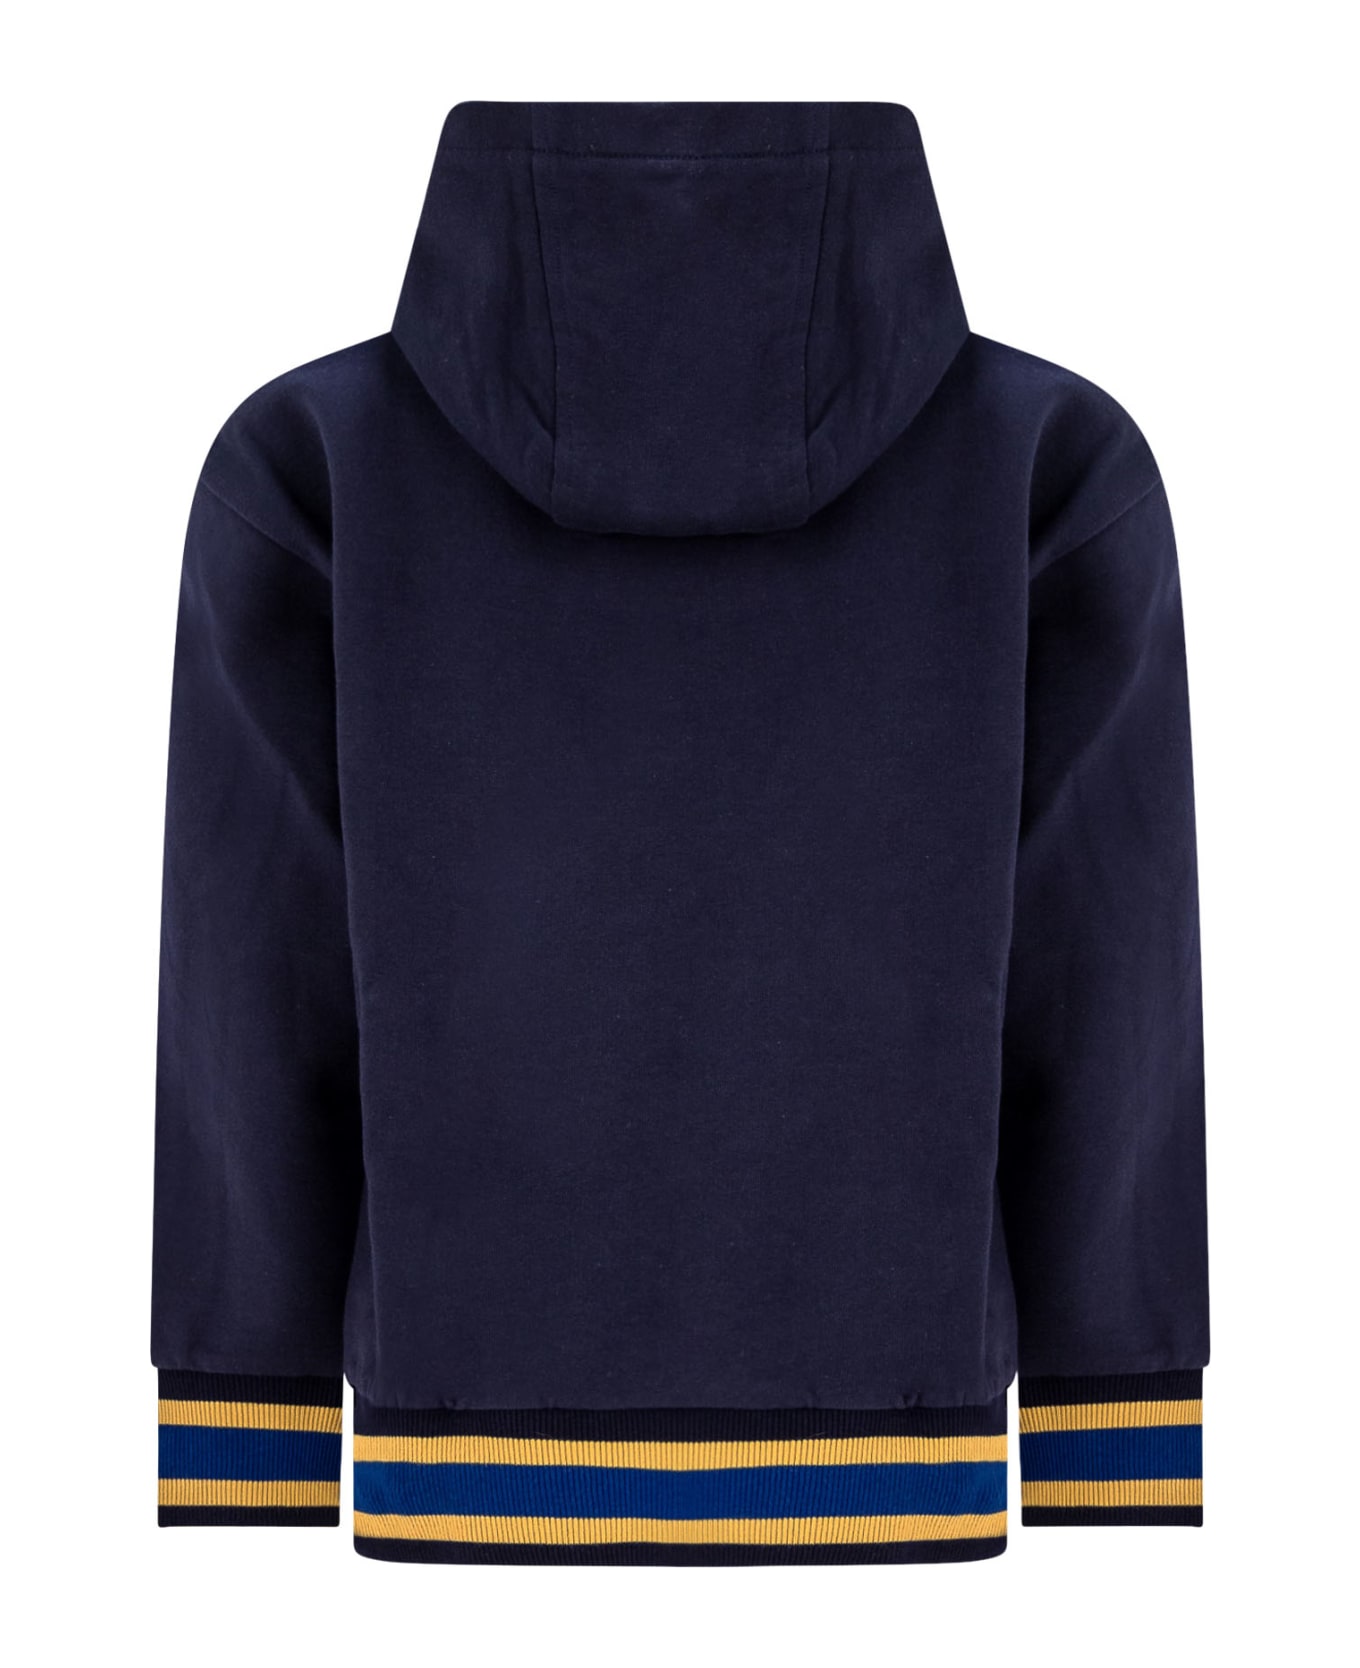 Versace Sweatshirt With Hood - NAVY-GOLD-BLUE